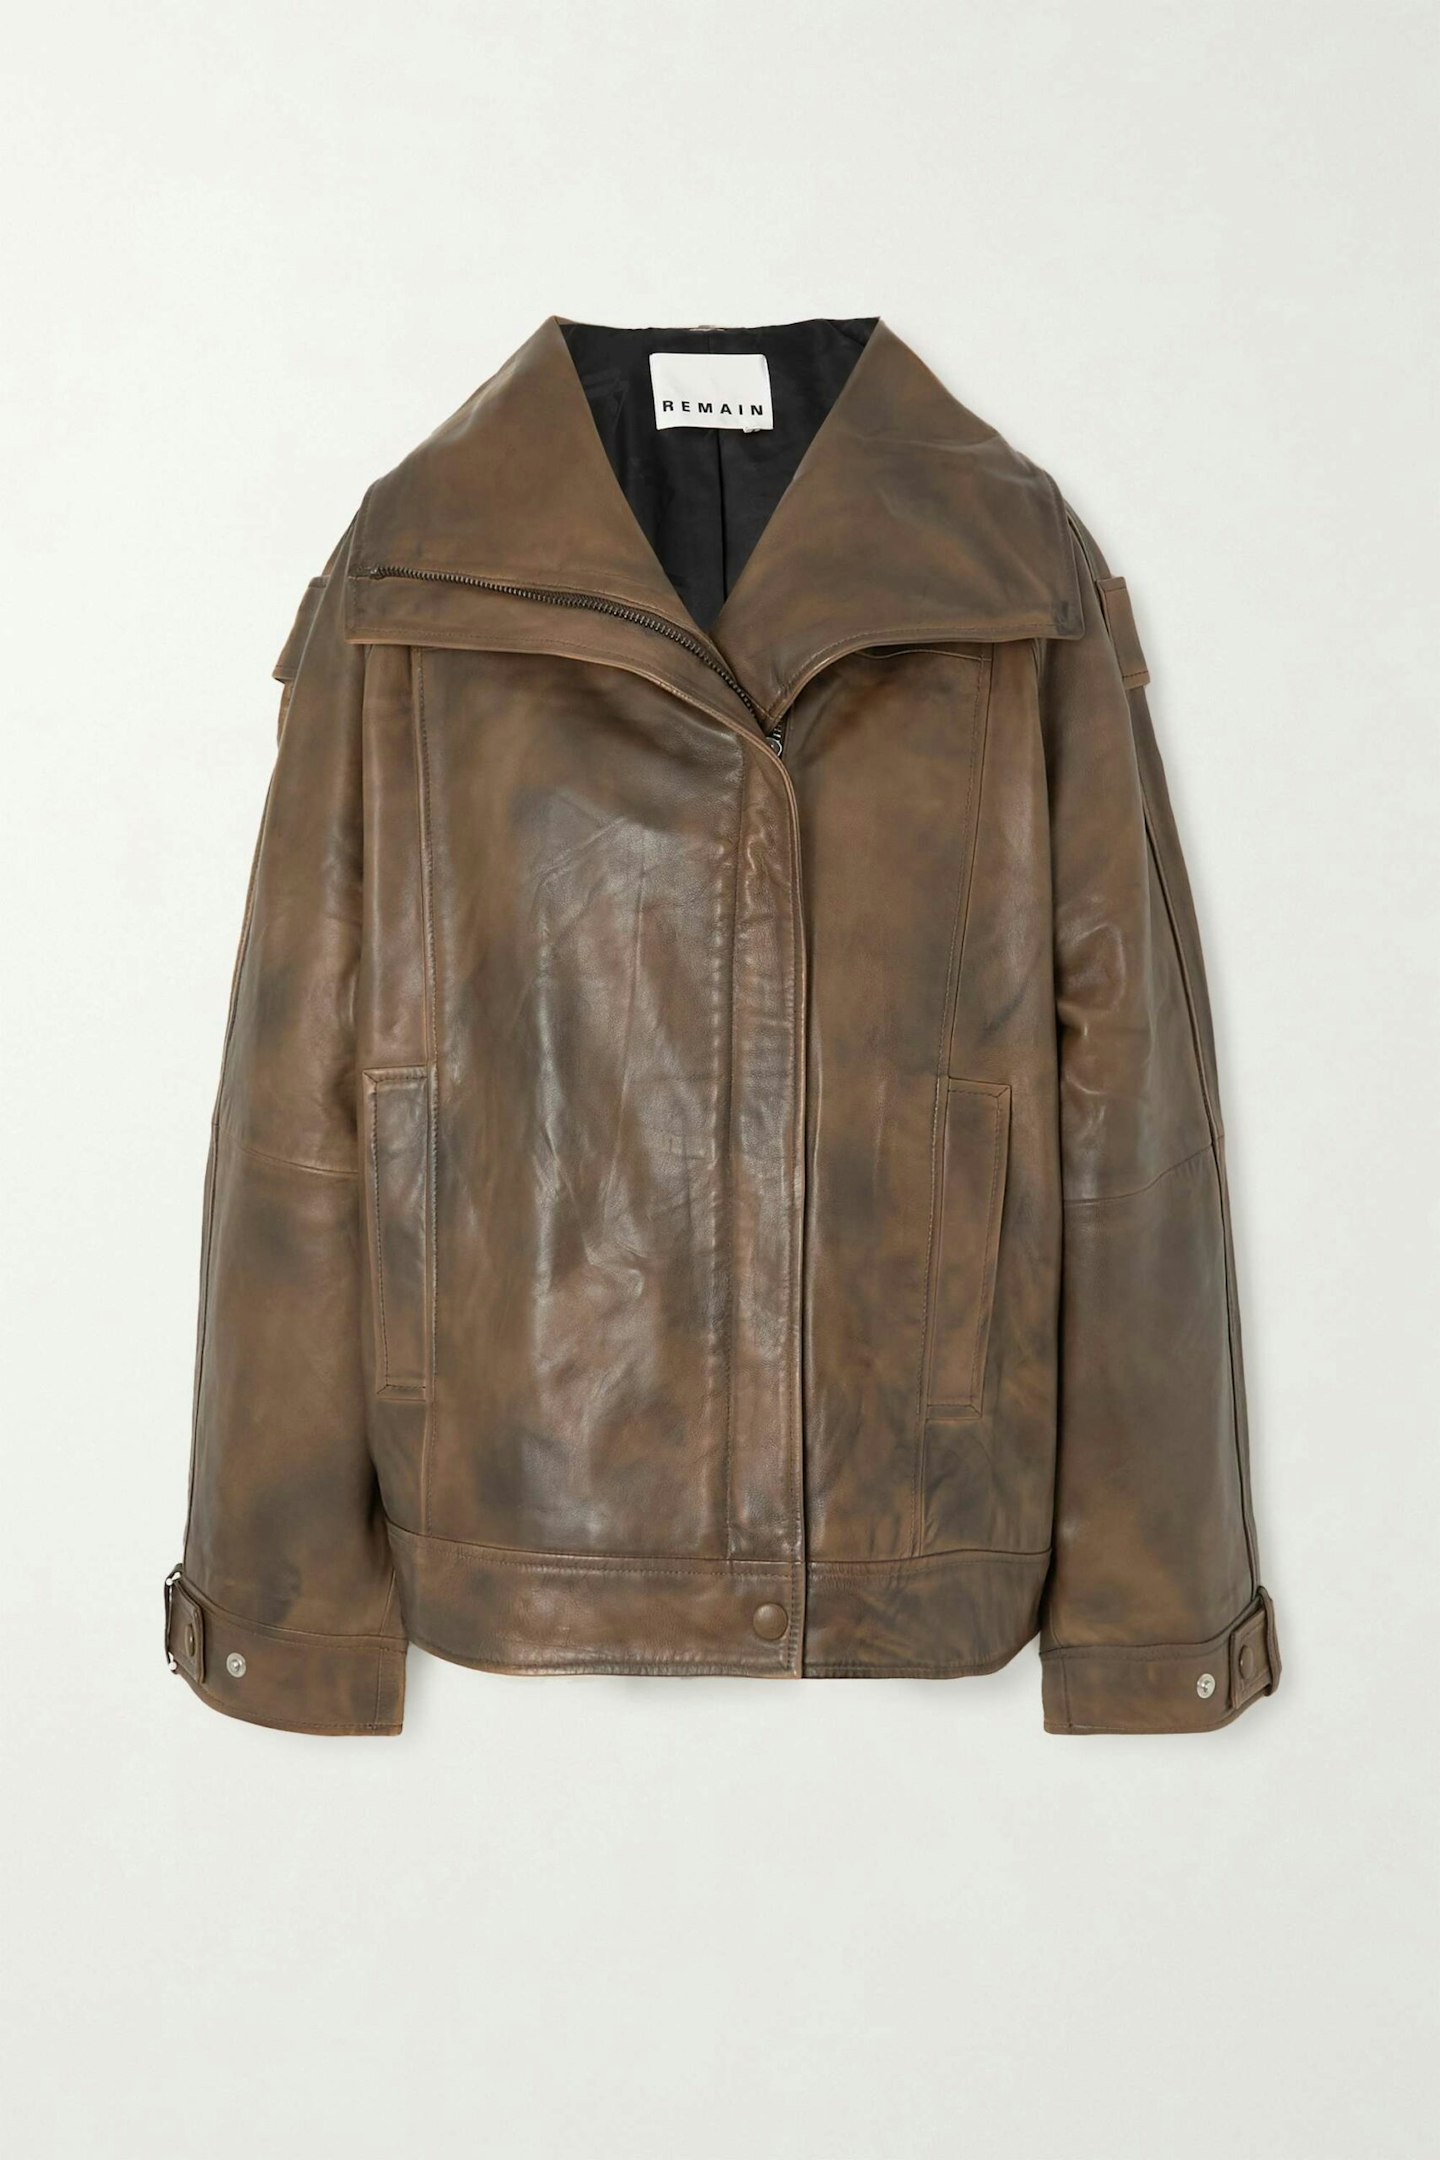 Remain Birger Christensen, Liw Oversized Leather Jacket